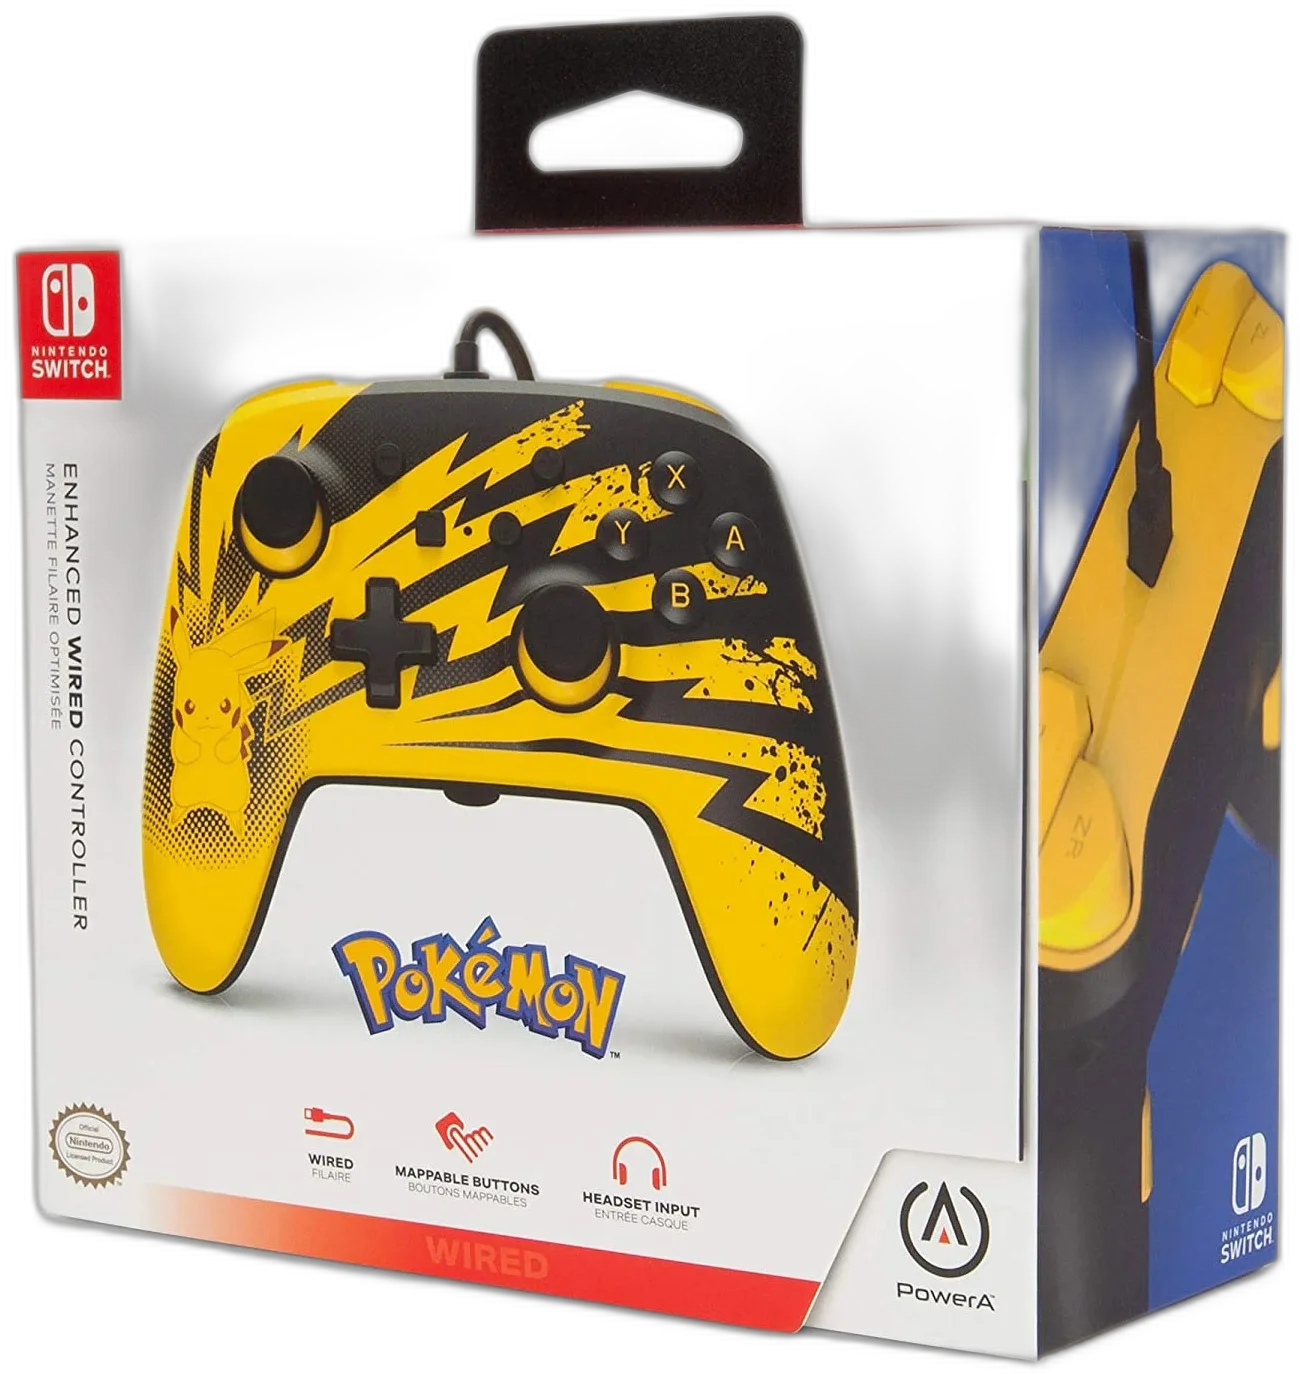  PowerA Pokemon Enhanced Wired Controller for Nintendo Switch -  Pikachu Lightning - Nintendo Switch : Video Games